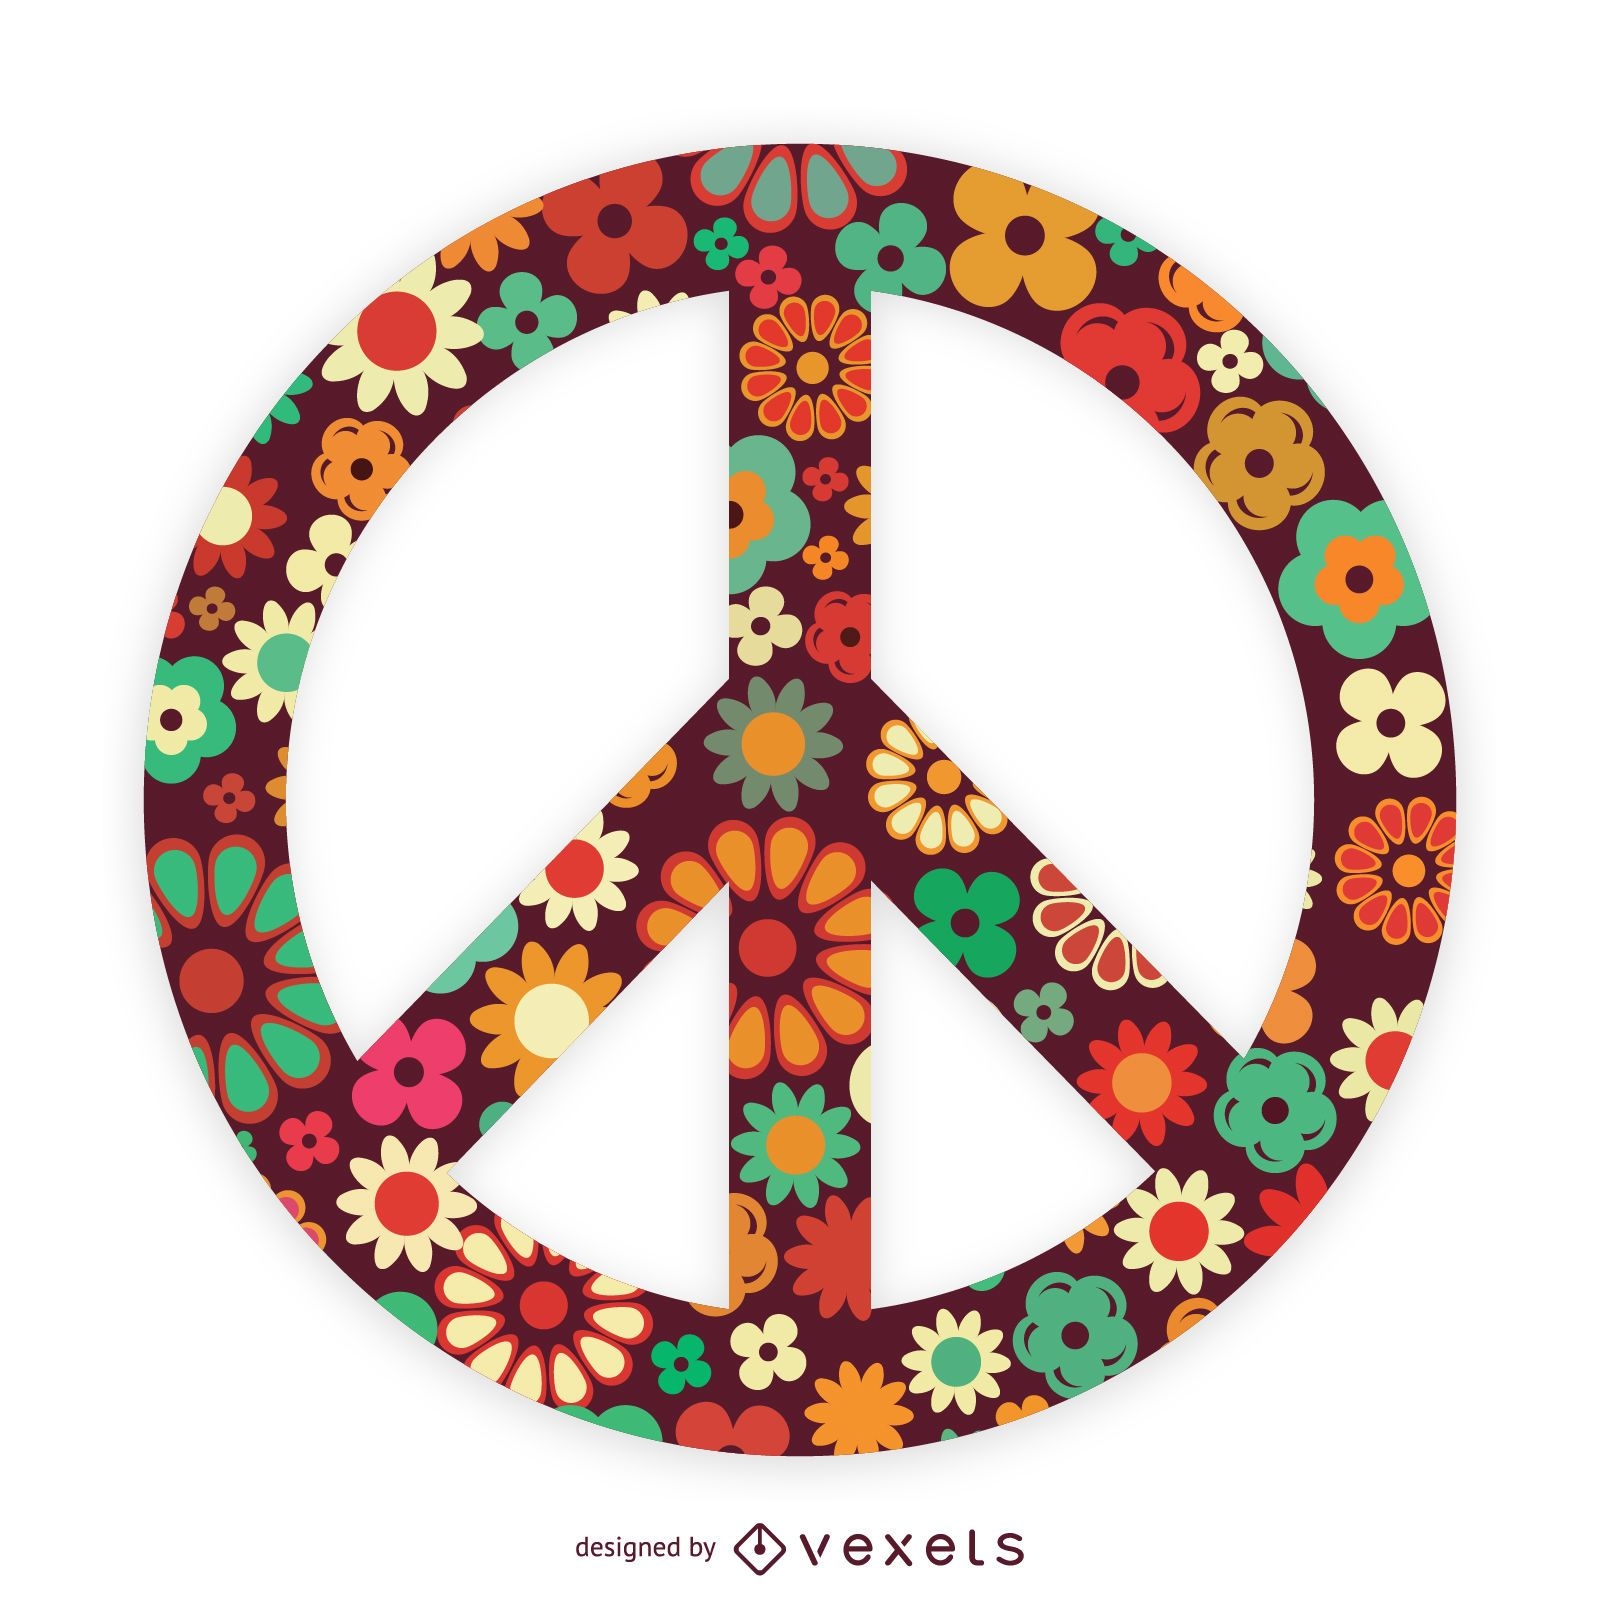 Flower peace symbol